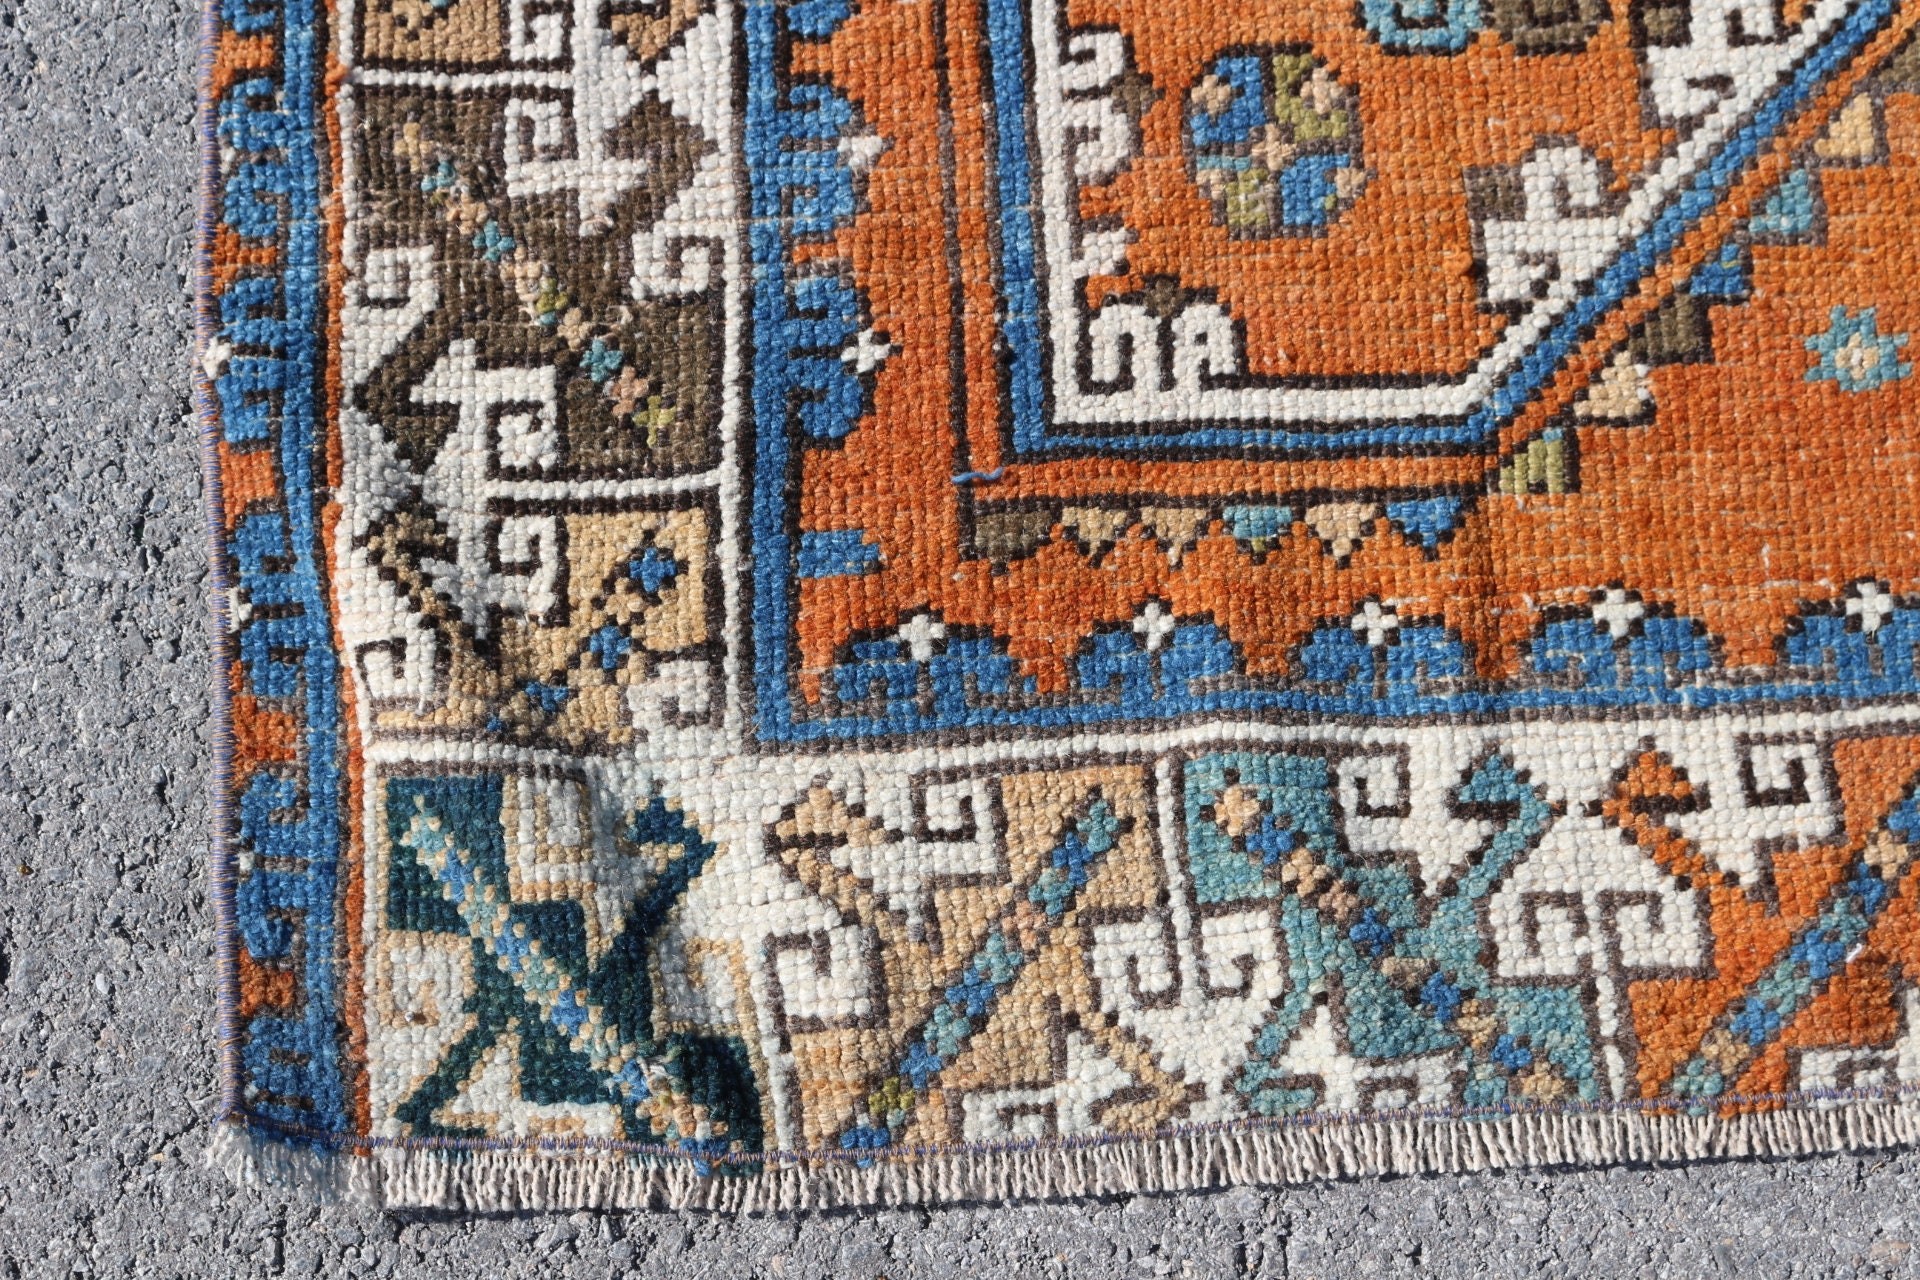 Anatolian Rugs, Orange Oushak Rug, Vintage Rug, Cool Rug, 6.2x6.6 ft Large Rugs, Dining Room Rug, Living Room Rug, Turkish Rug, Bright Rugs